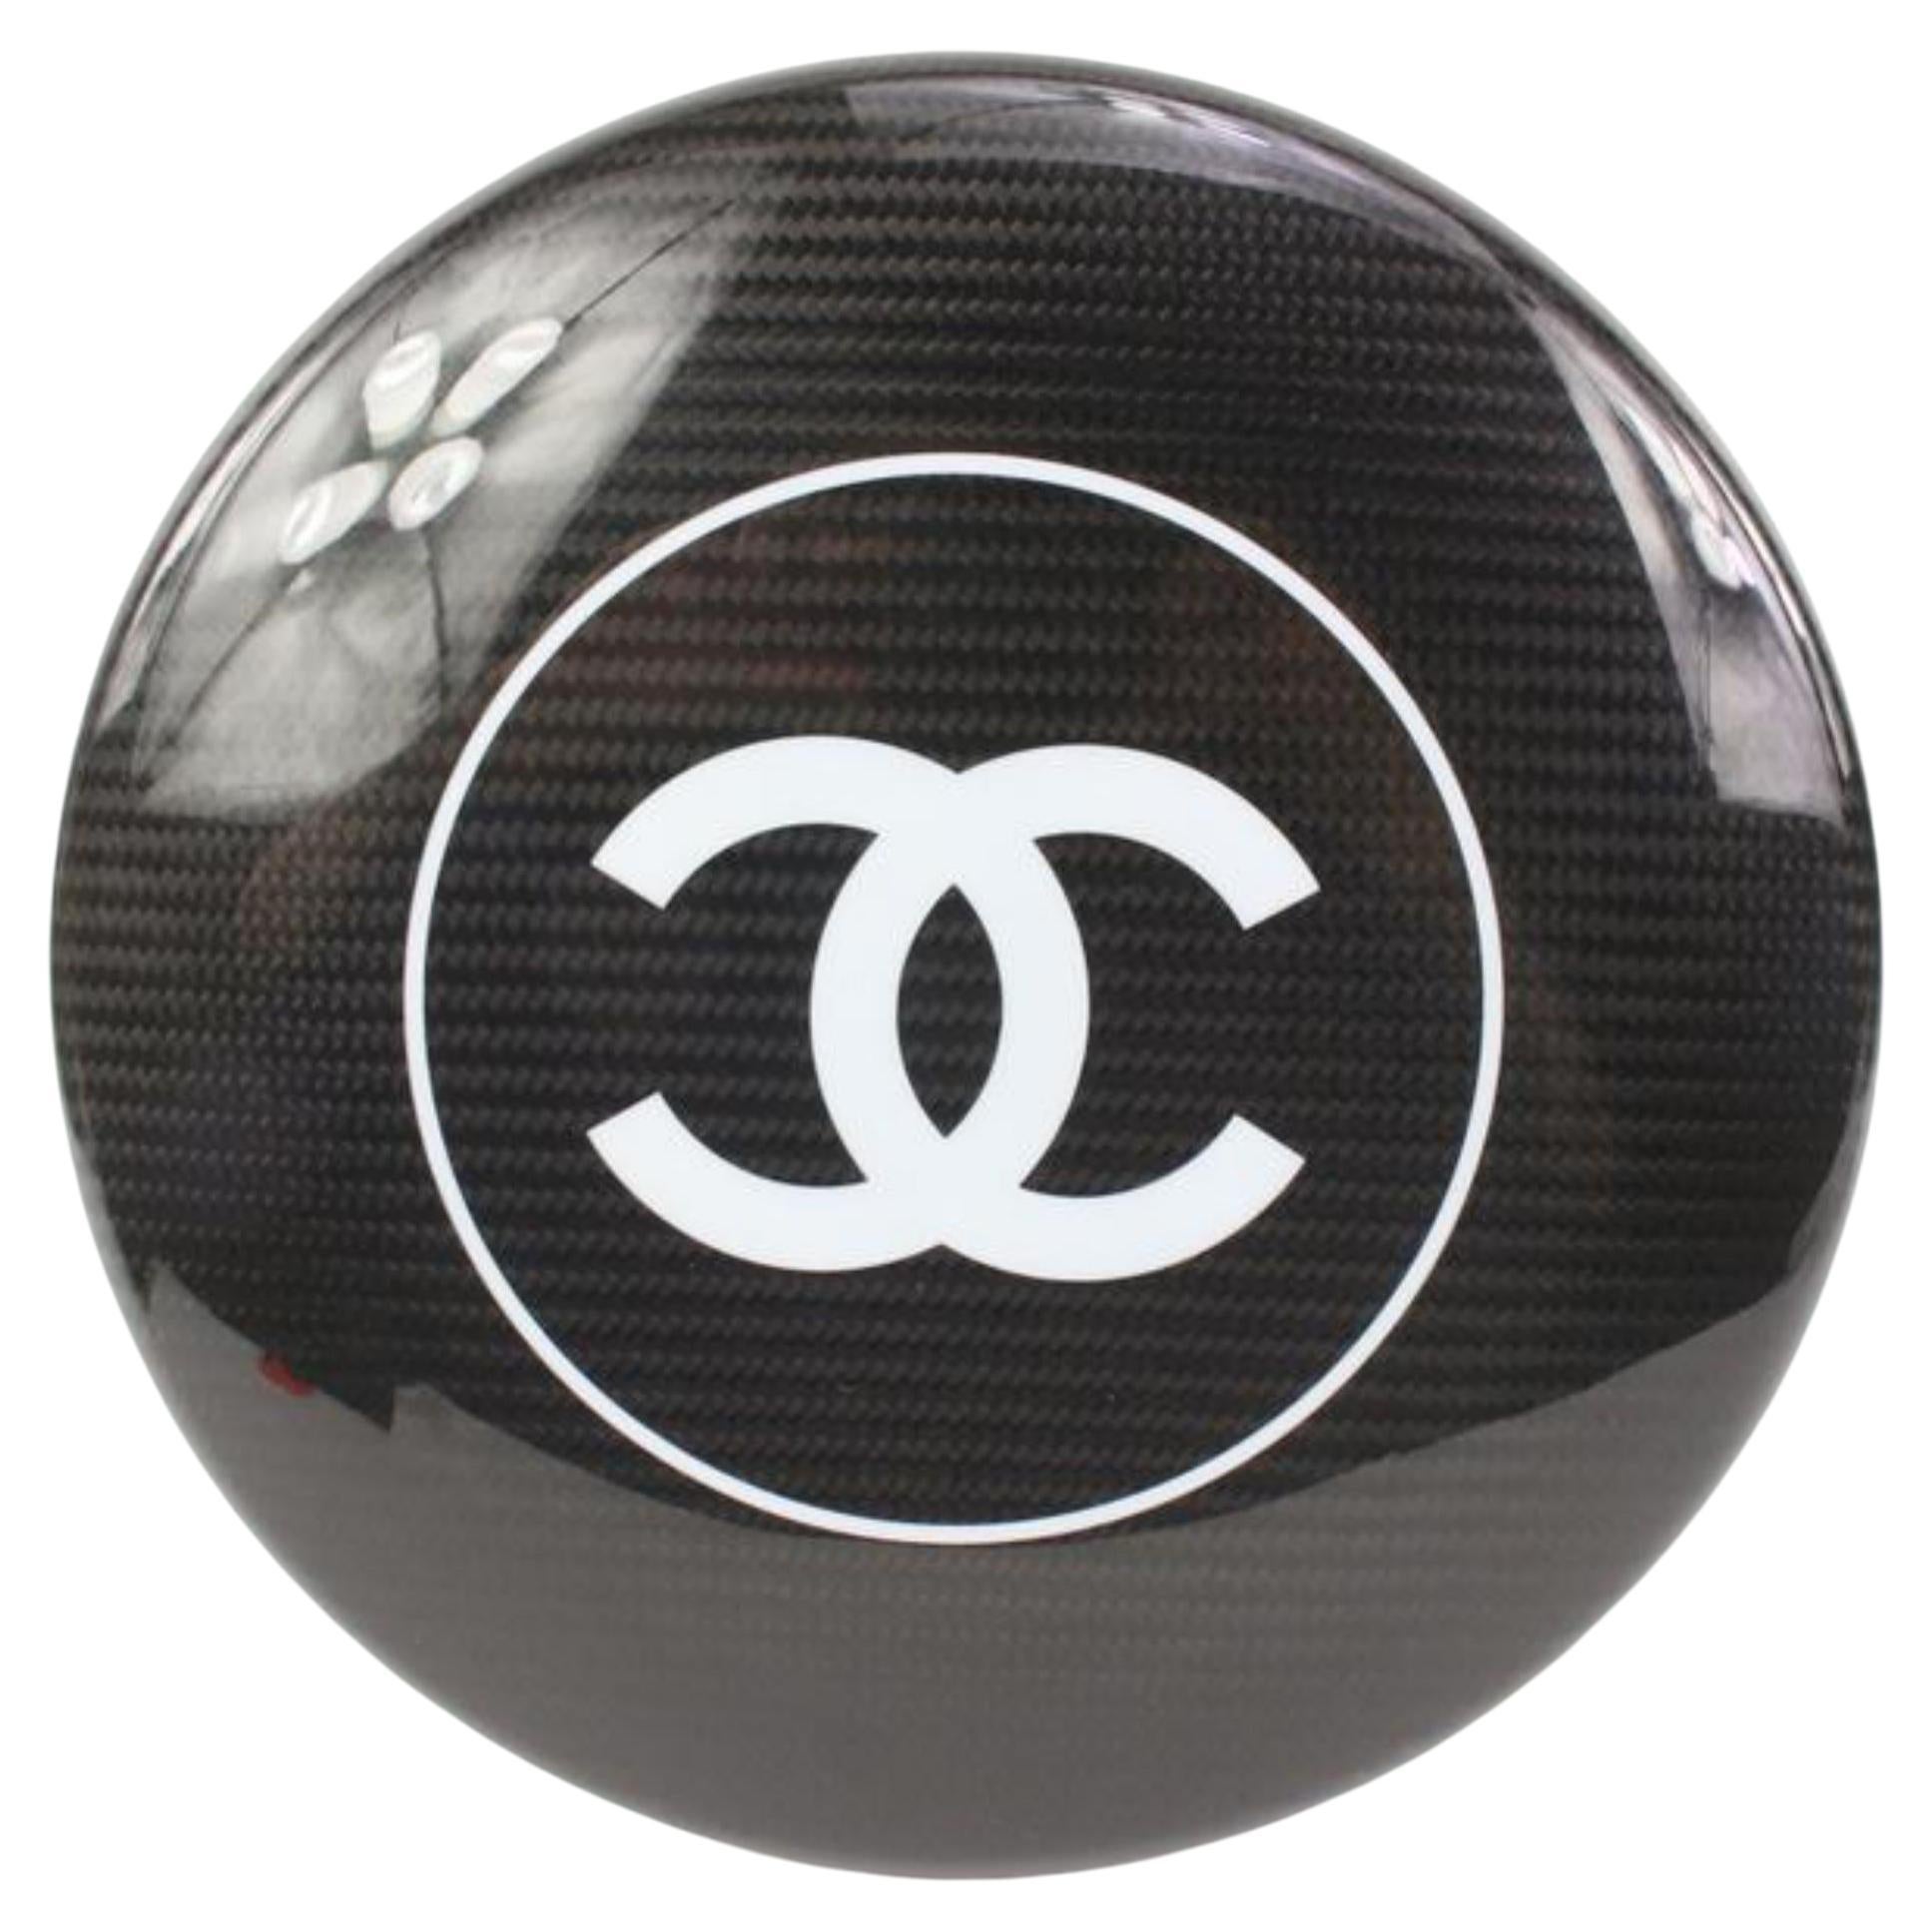 Chanel 22P Black Denim x Pink CC Logo All Over Baseball Cap 98ck323s